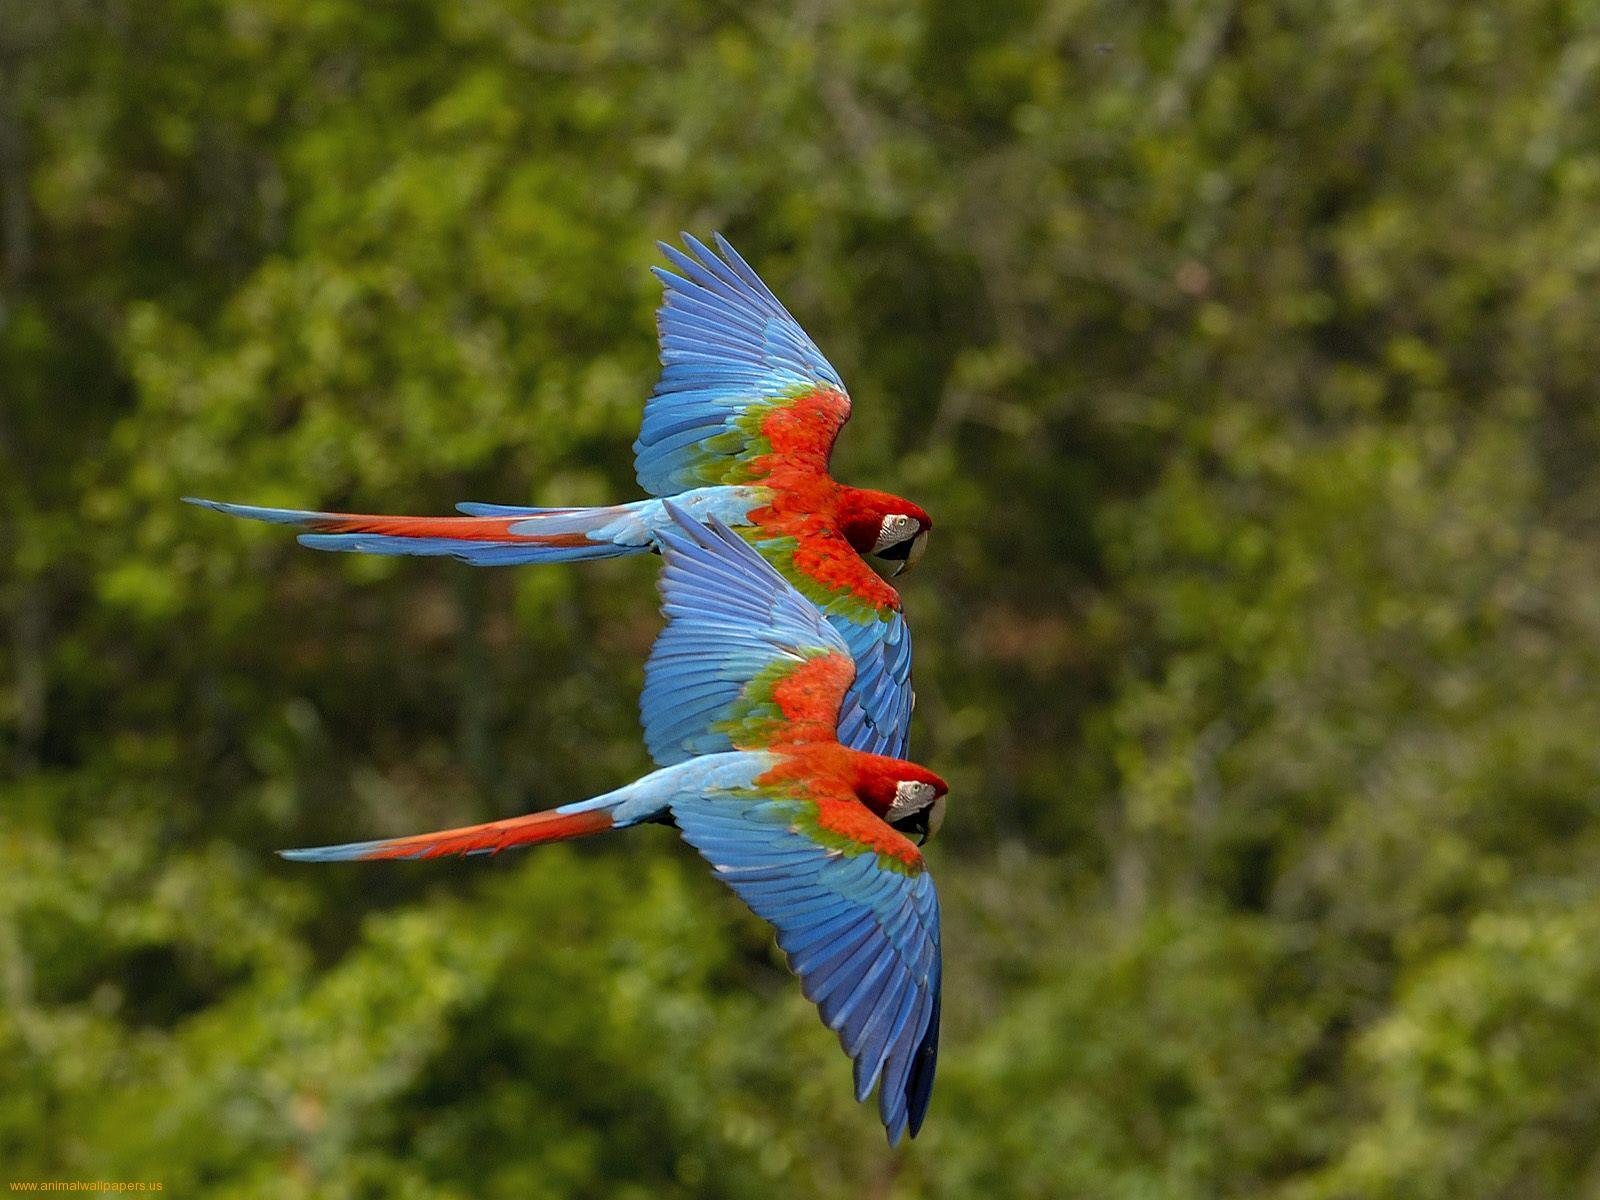 Hd colorful parrots wallpaper